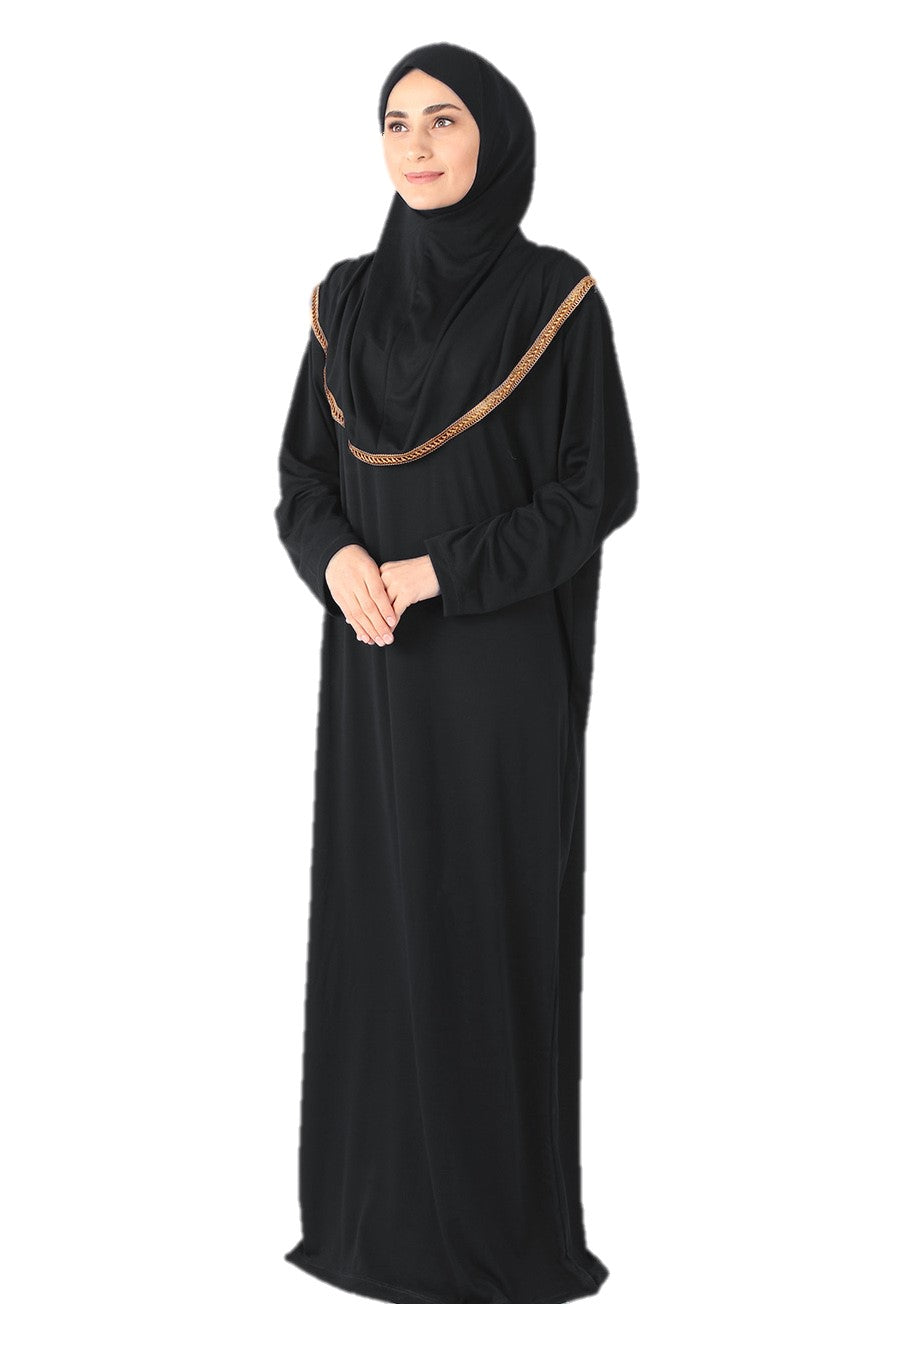 Black Turkish Prayer Dress - Chaddors